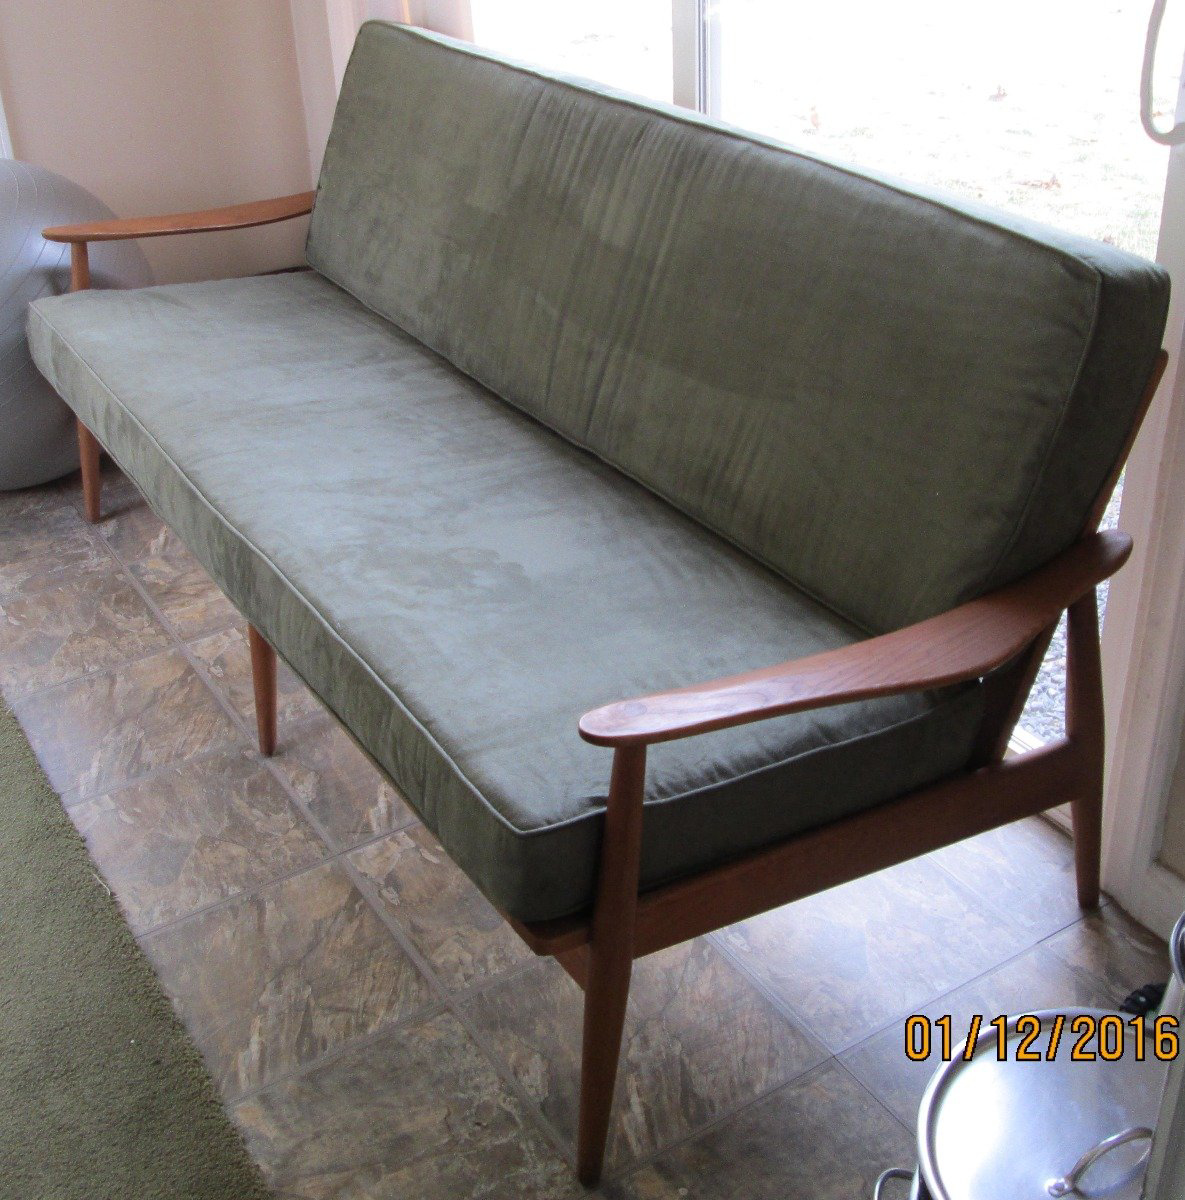 Custom Rectangle/Square Shaped Seat Cushions